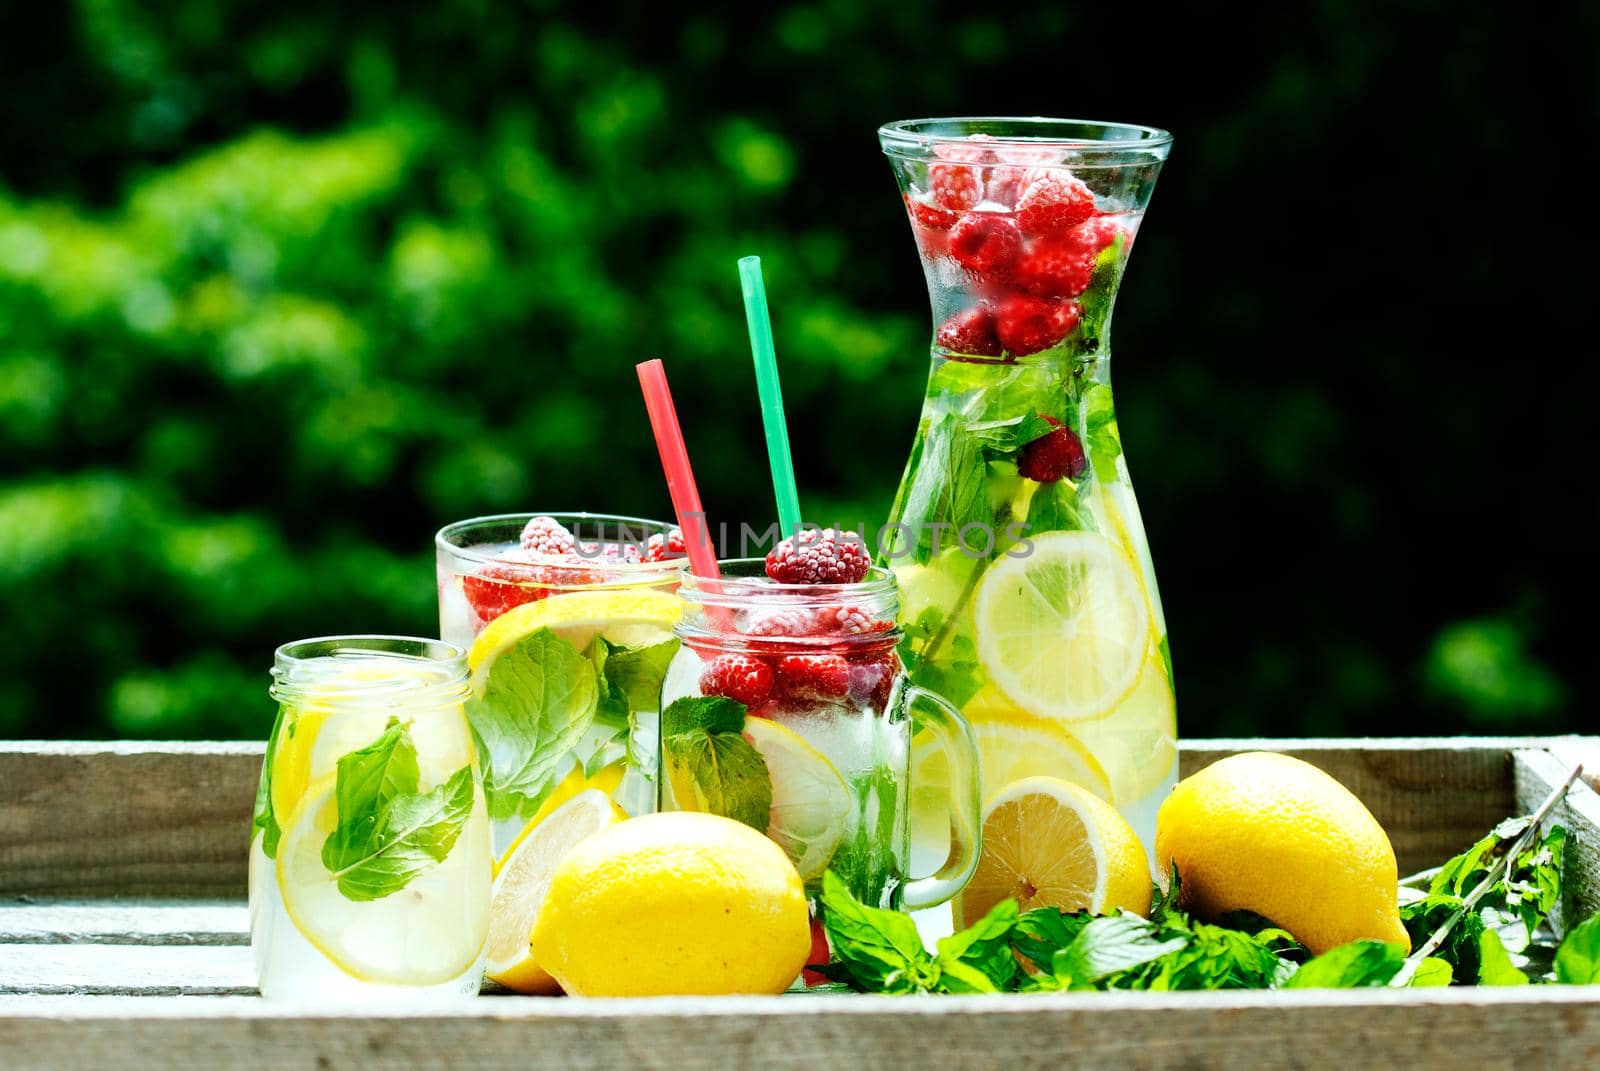 lemonad jars with mint and ice. High quality photo